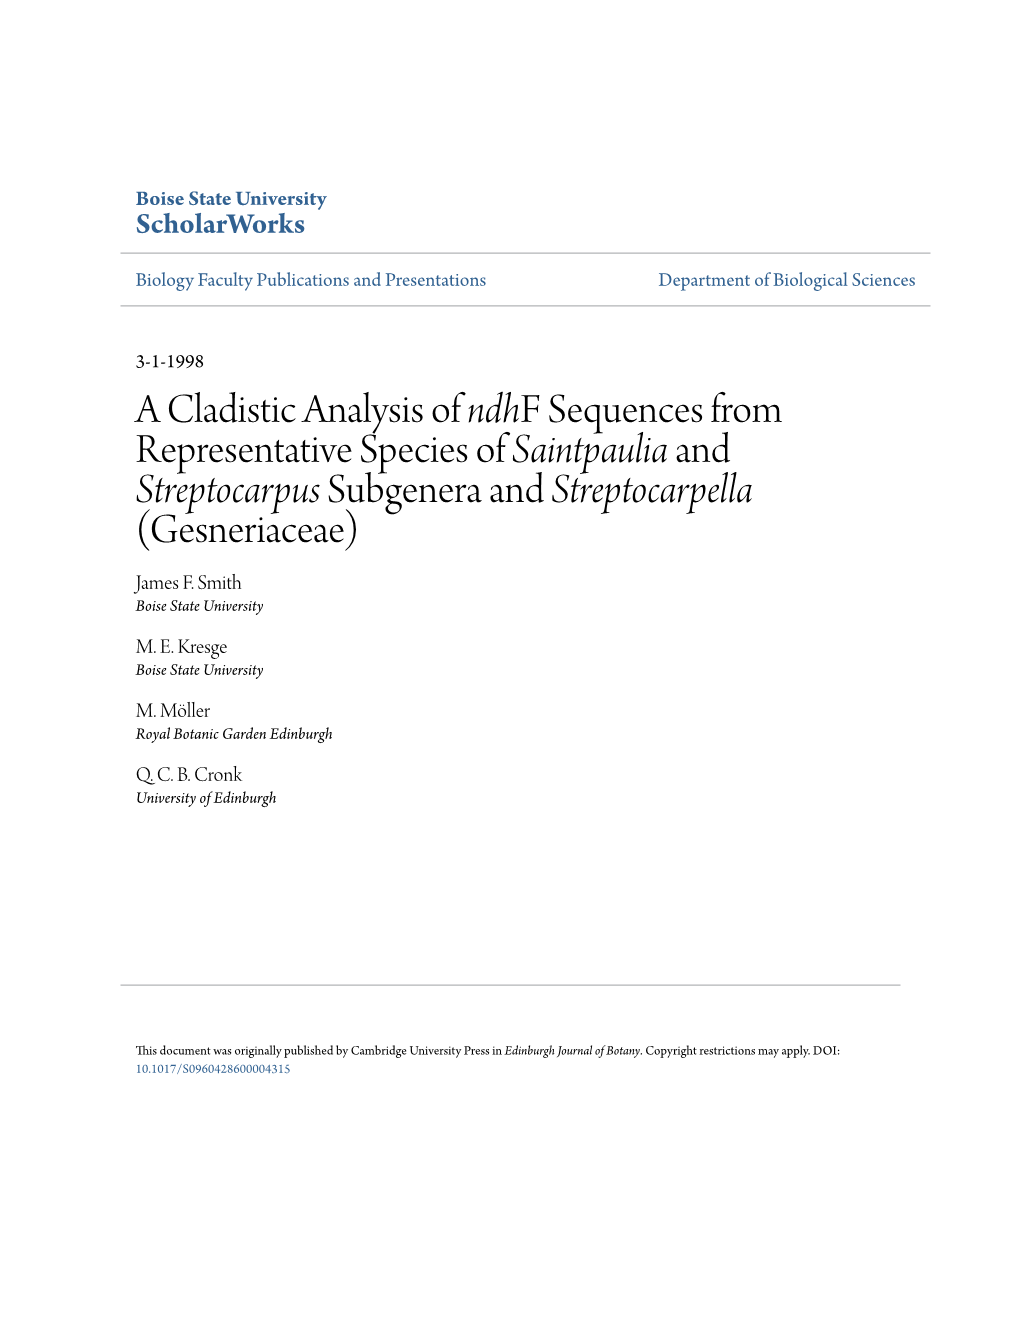 A Cladistic Analysis of Ndhf Sequences from Representative Species of Saintpaulia and Streptocarpus Subgenera and Streptocarpella (Gesneriaceae) James F